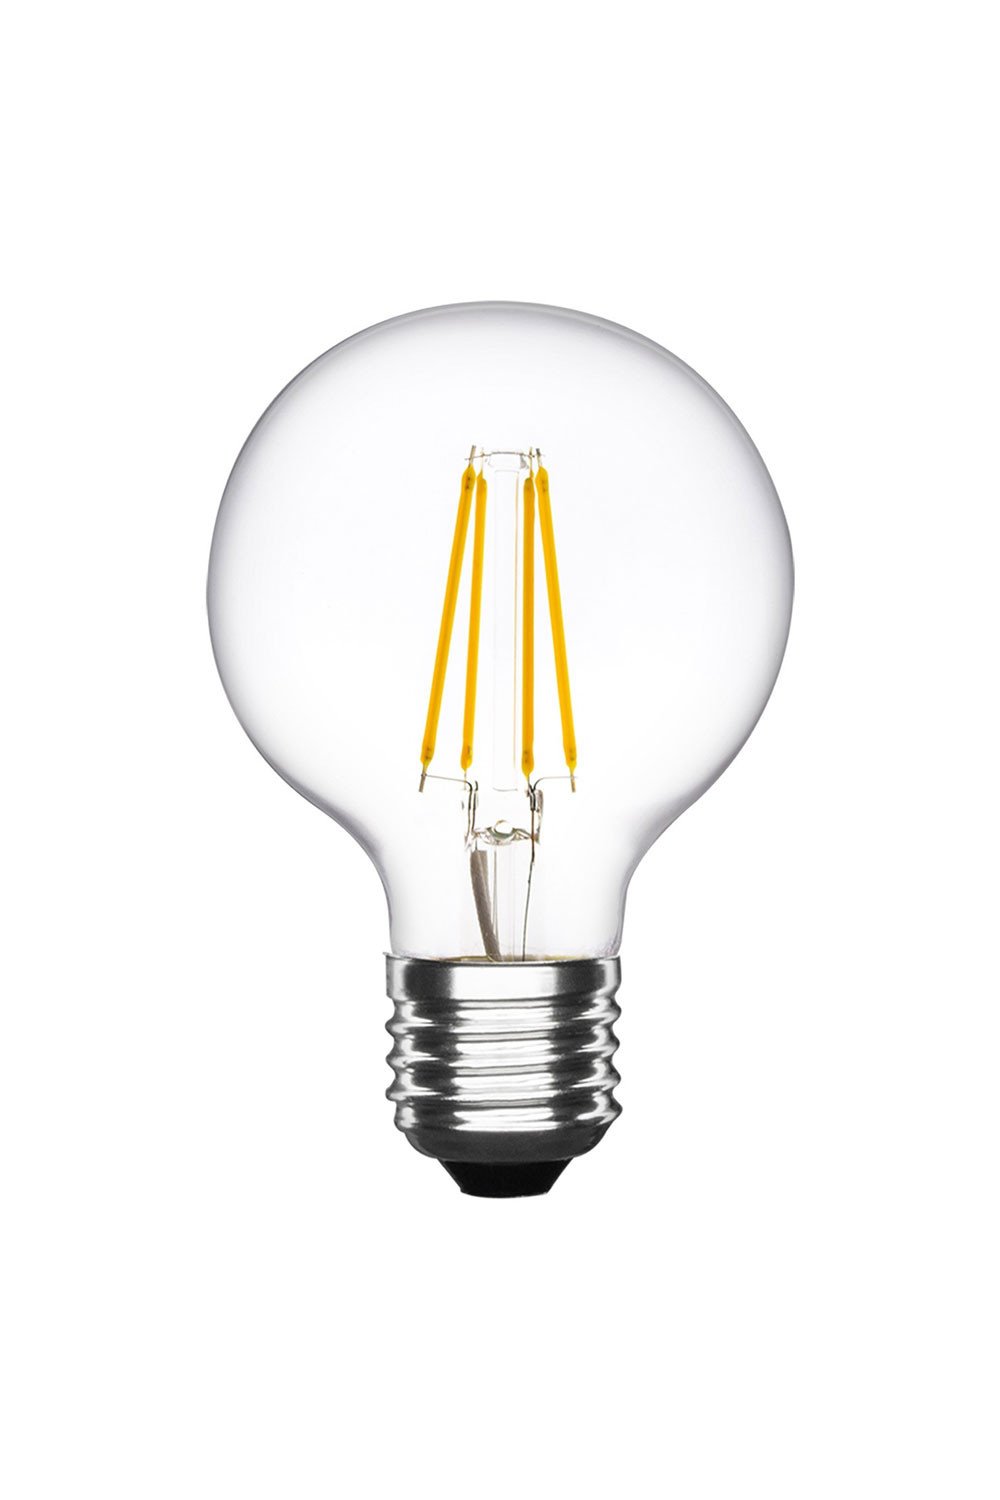 Lampadina LED Vintage Regolabile E27 Glob, immagine della galleria 1